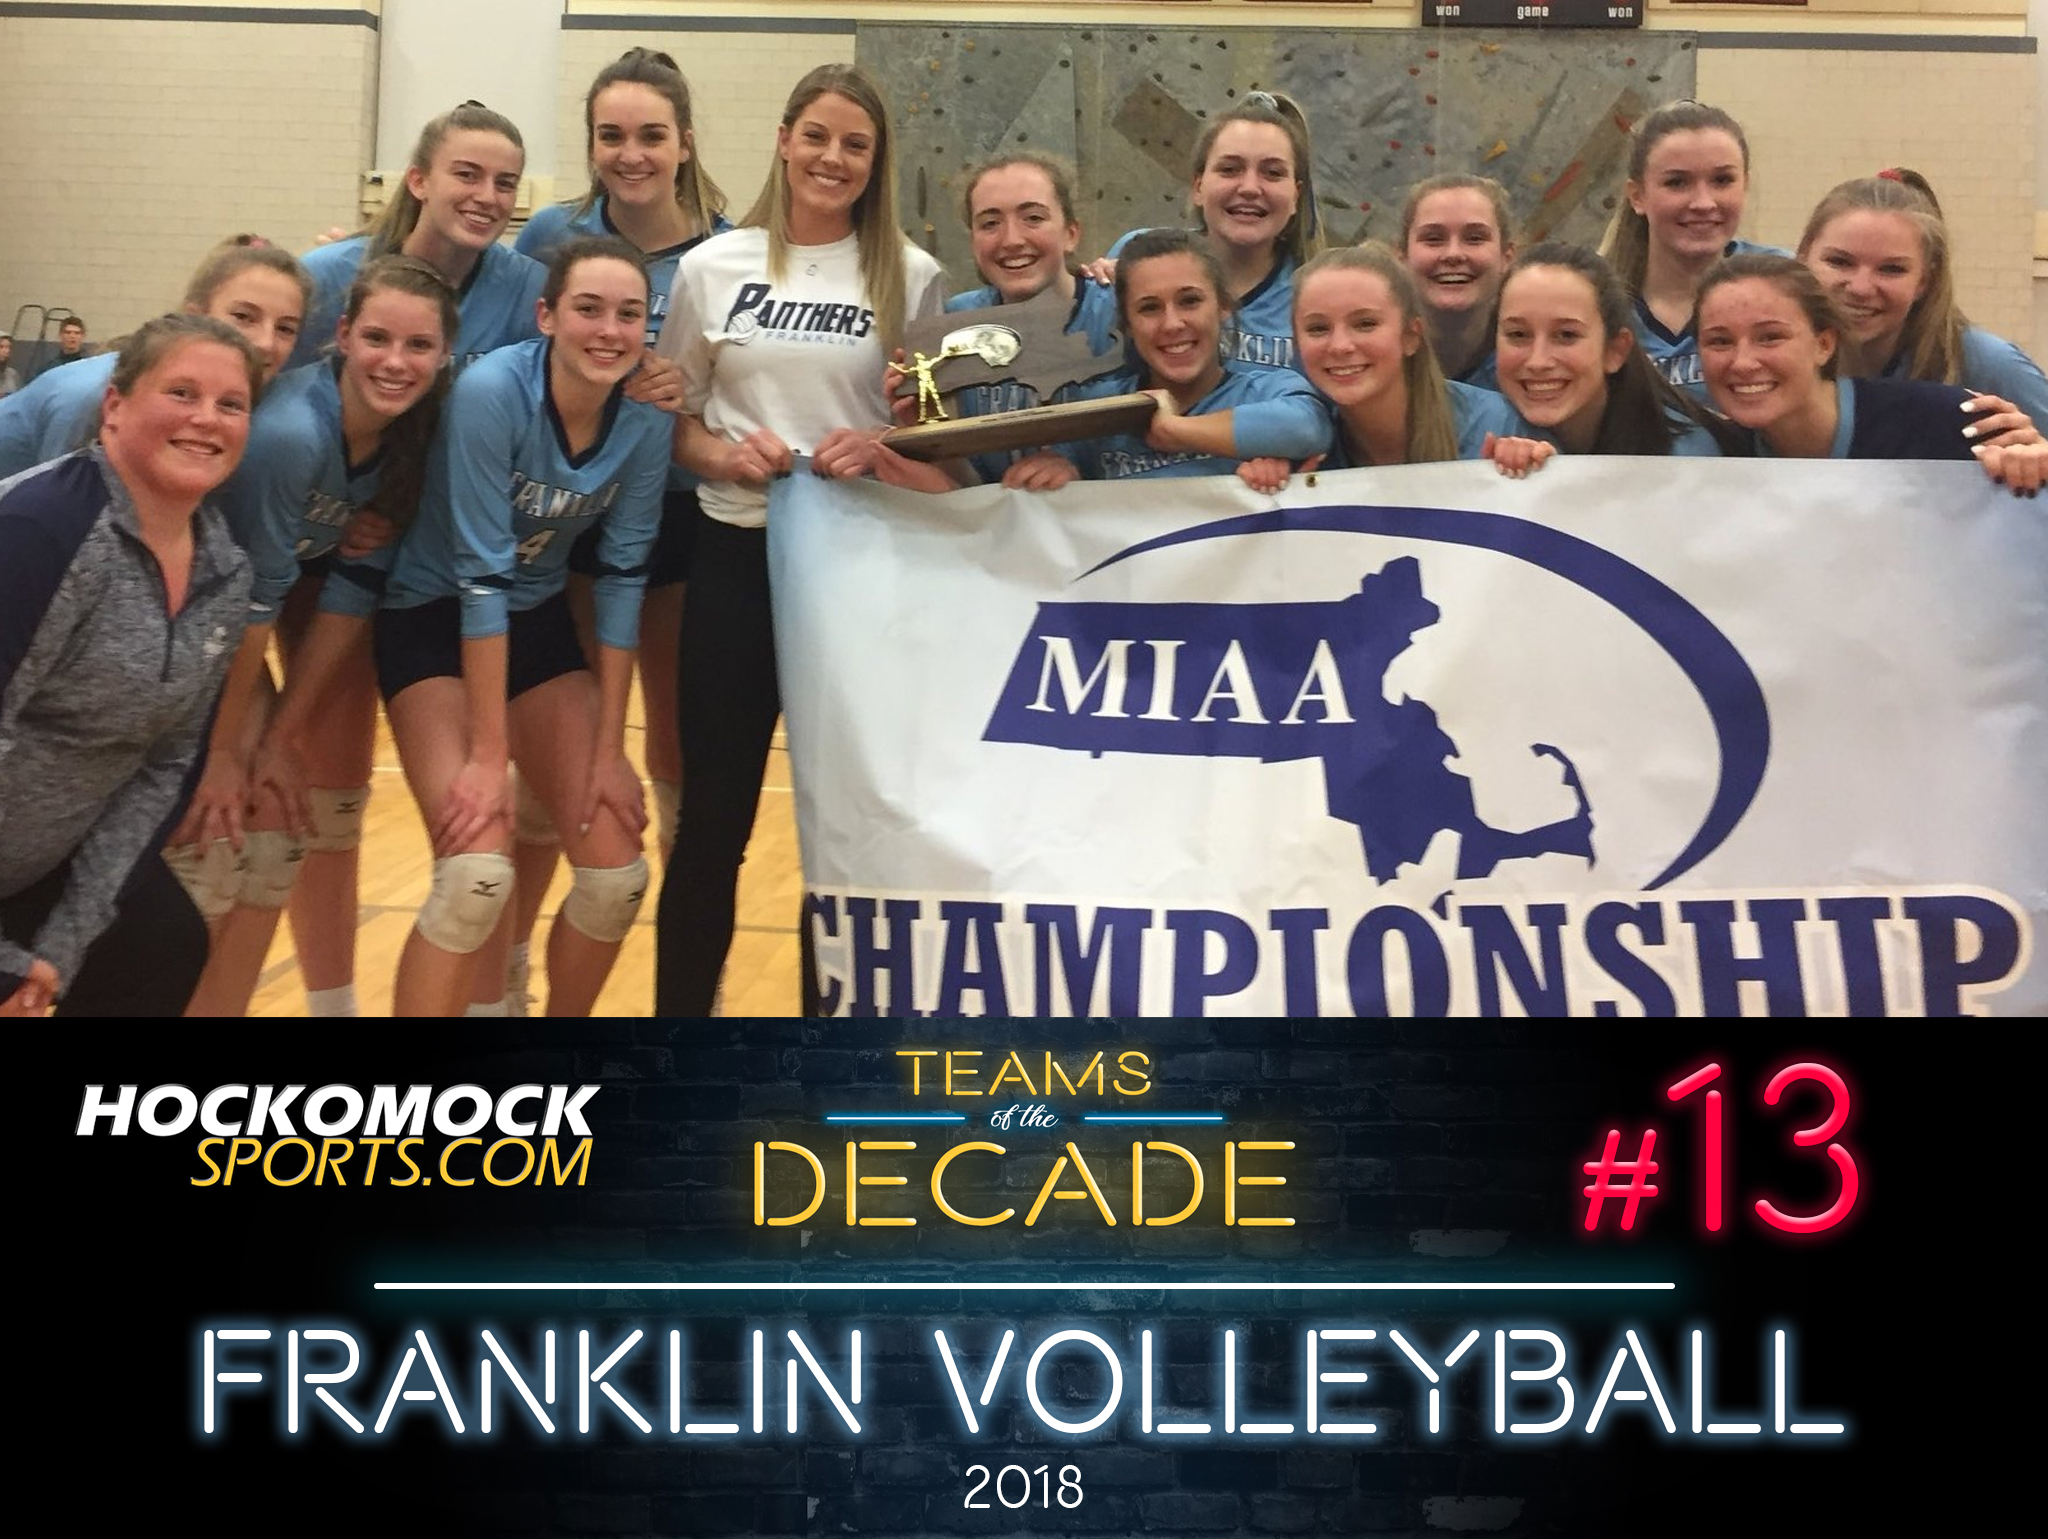 Franklin volleyball